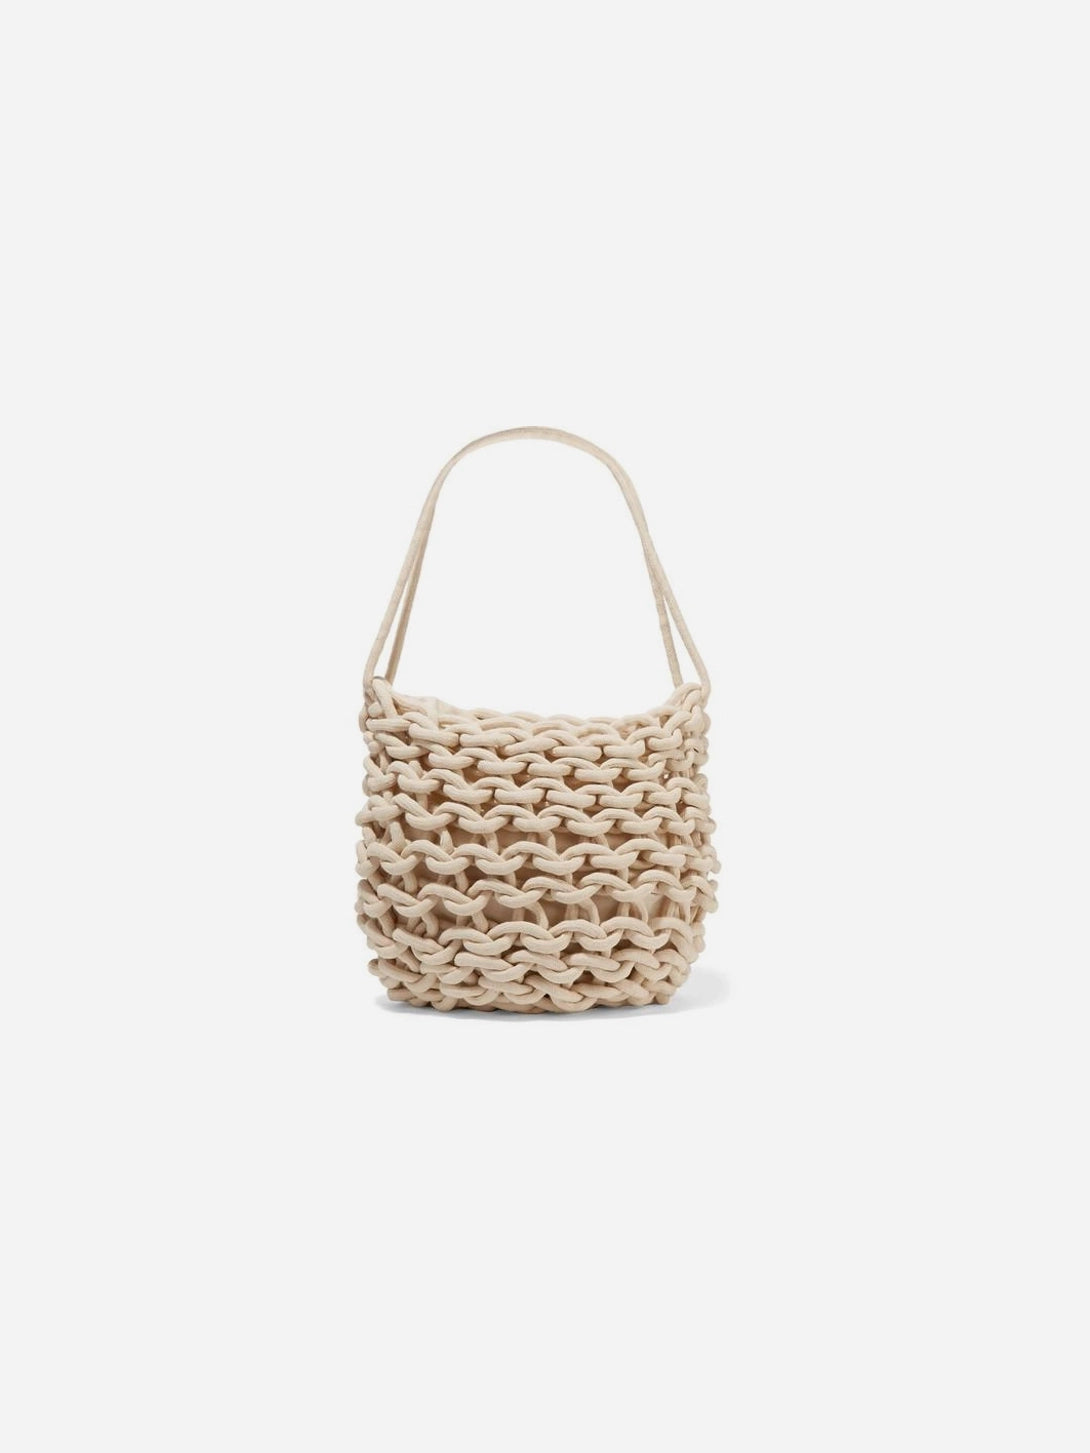 Natural Linen Dora Bag Sustainable Luxury Woven Shoulder Bag